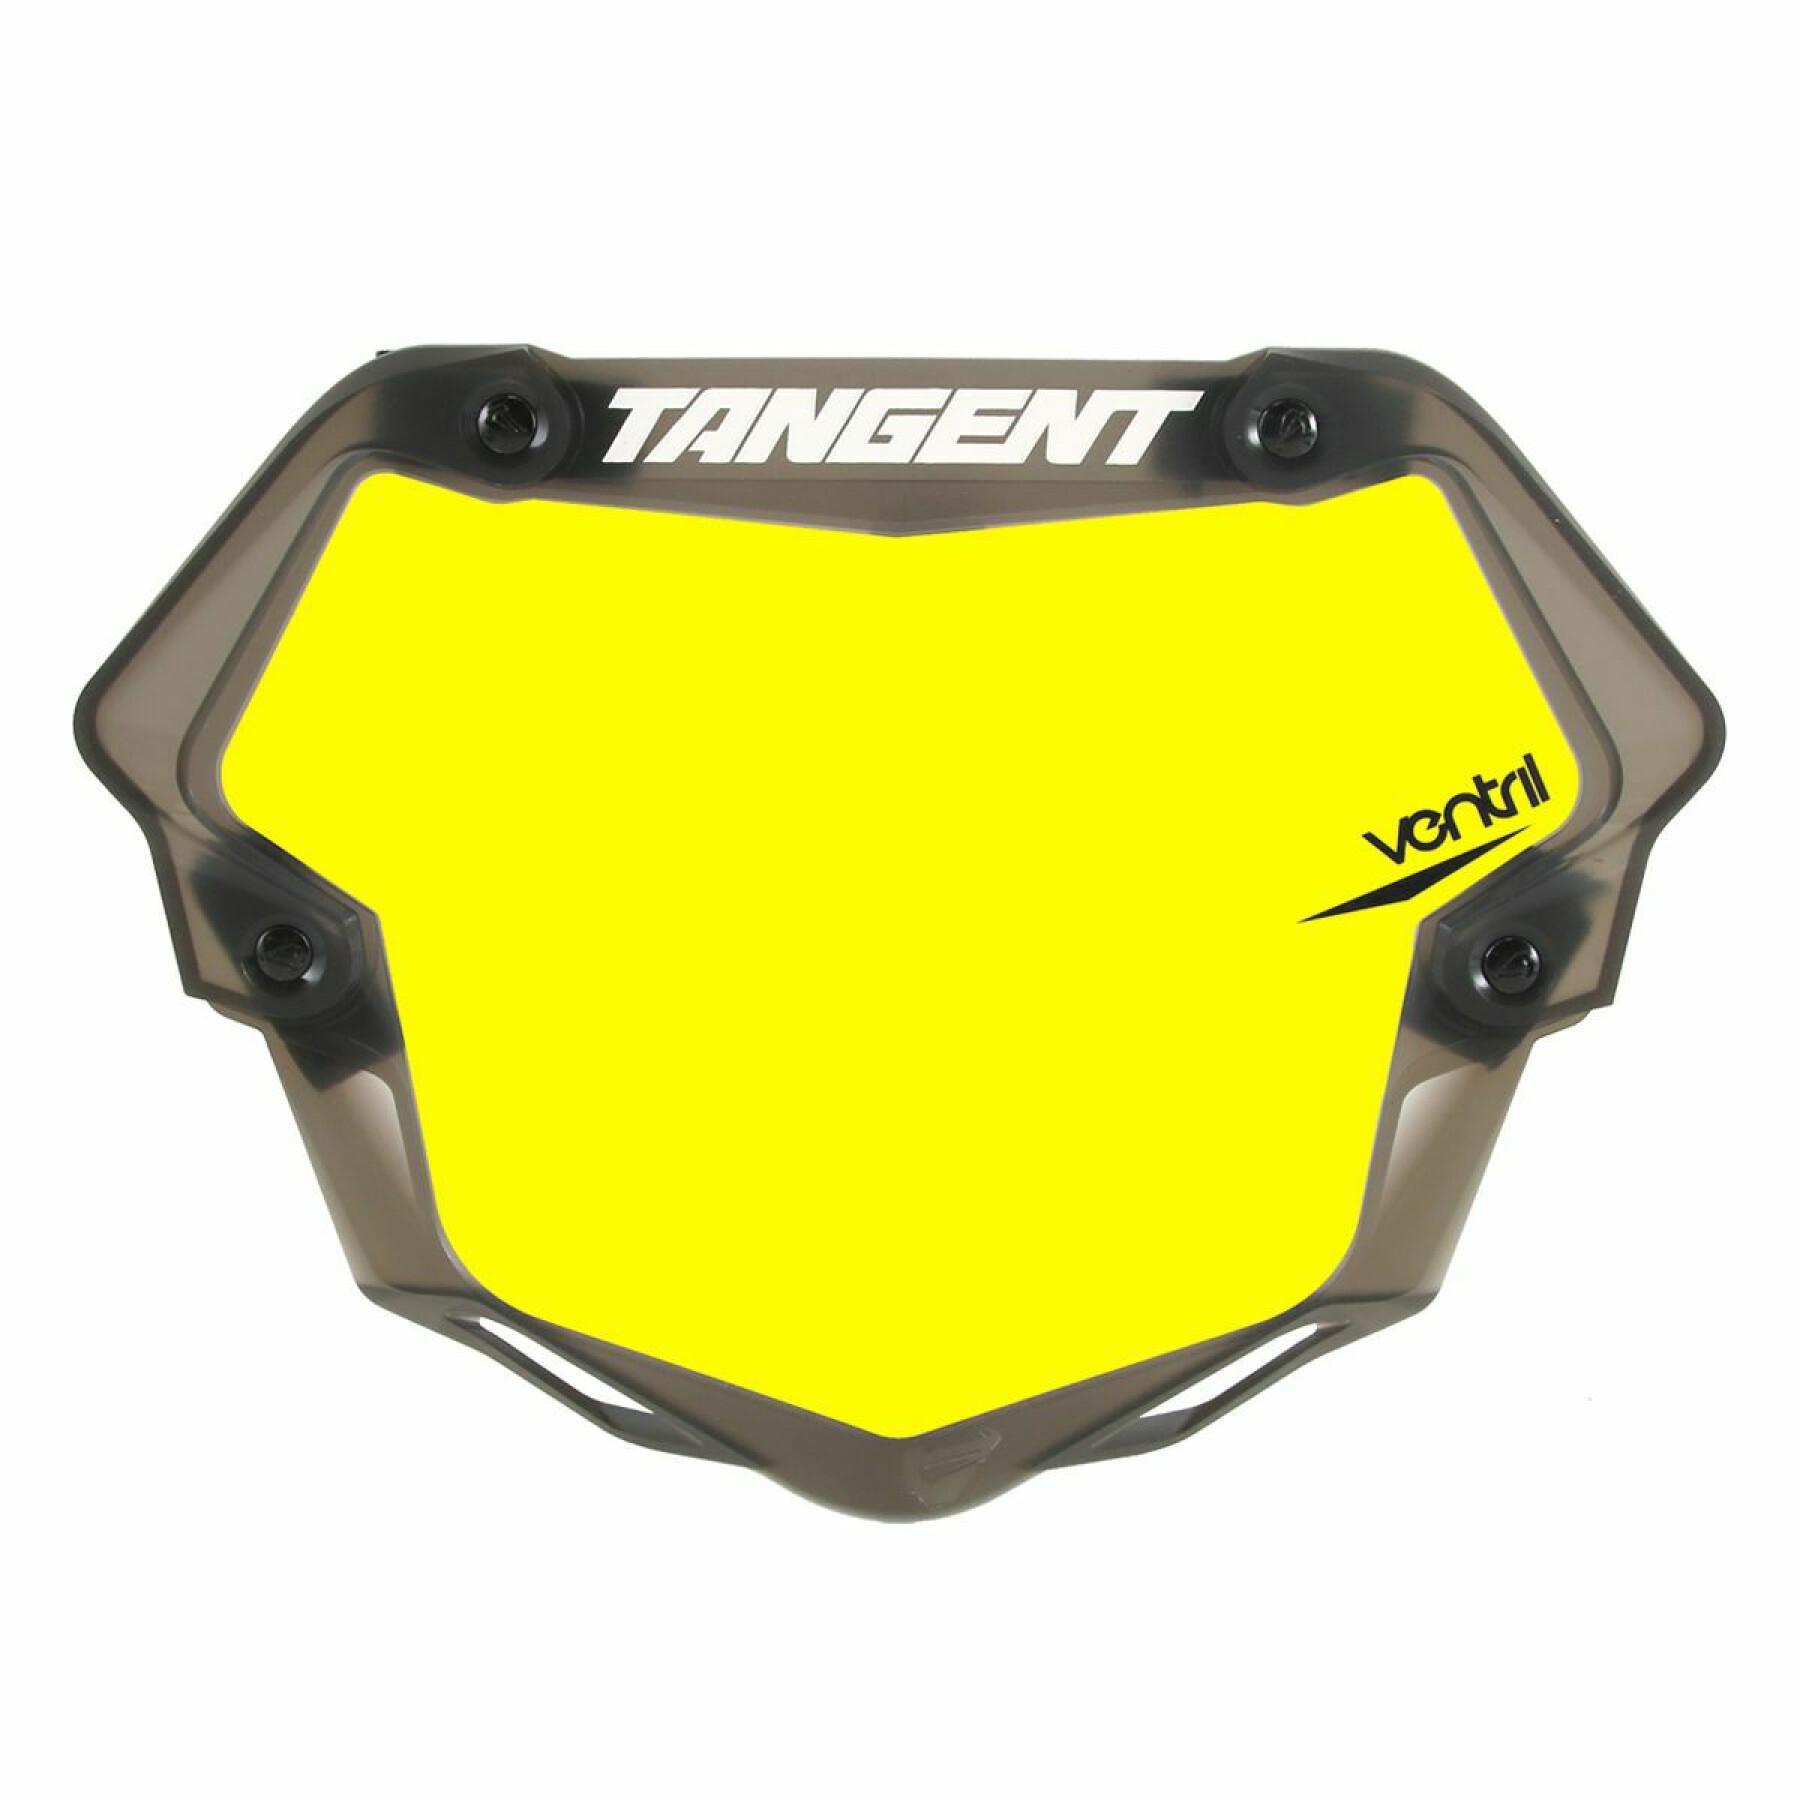 Piatto Tangent ventril 3d trans pro